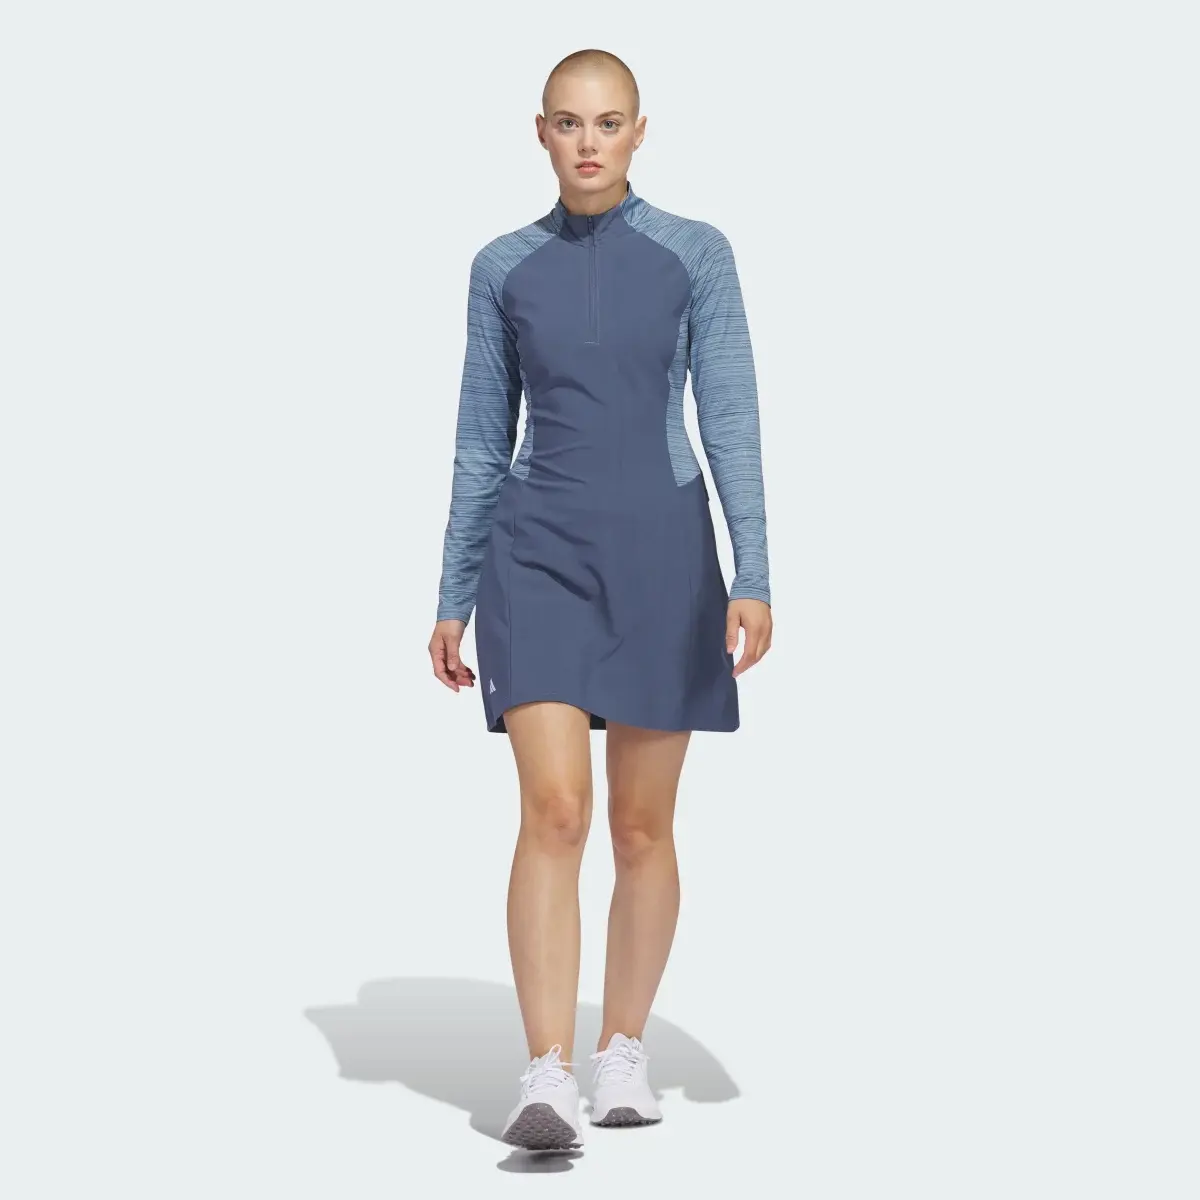 Adidas Ultimate365 Long Sleeve Dress. 2